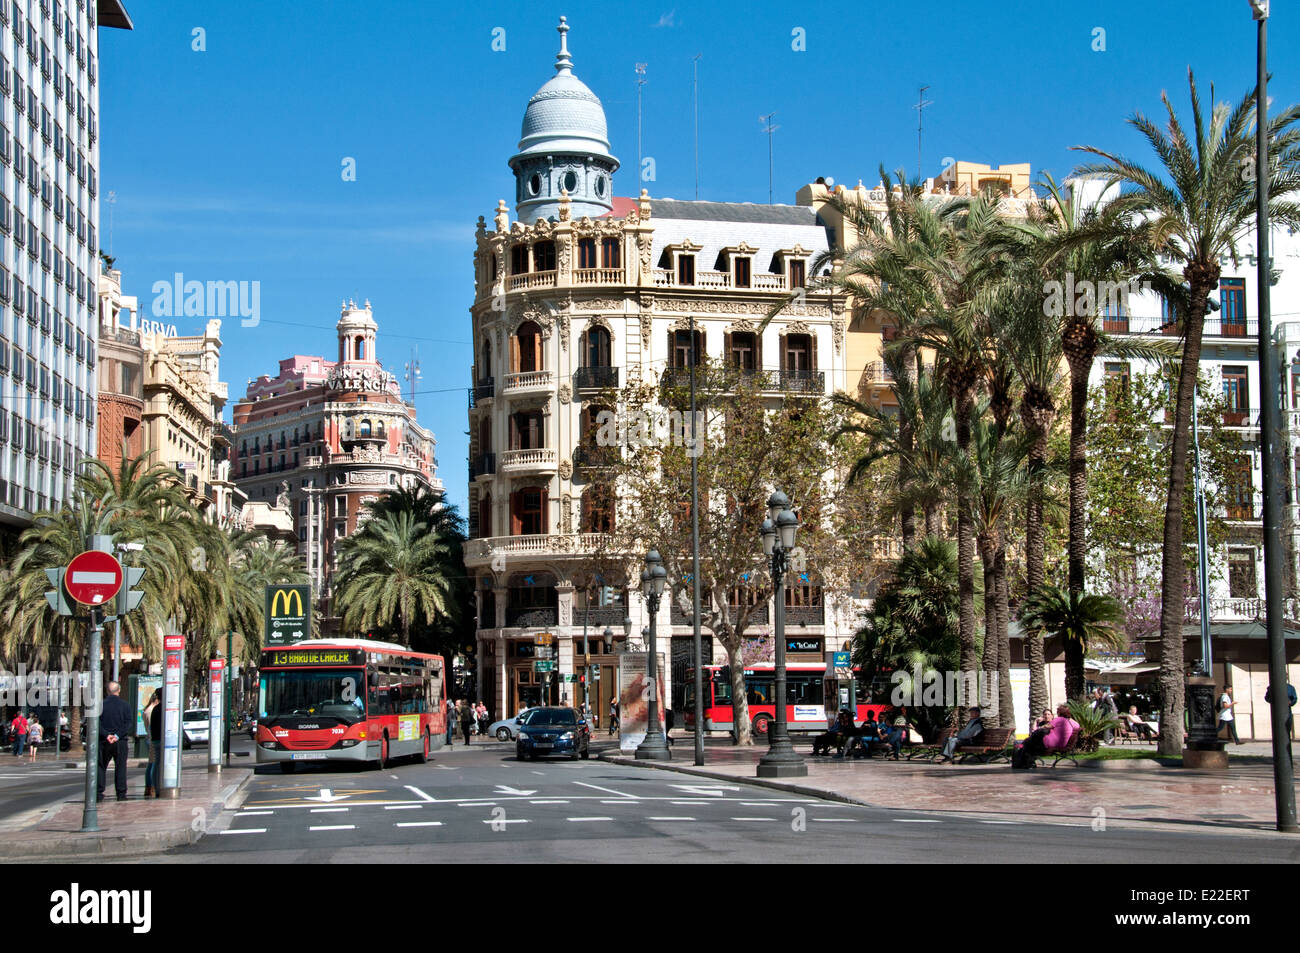 Le centre-ville de Valence Espagne Plaza del Ayuntamiento Banque D'Images